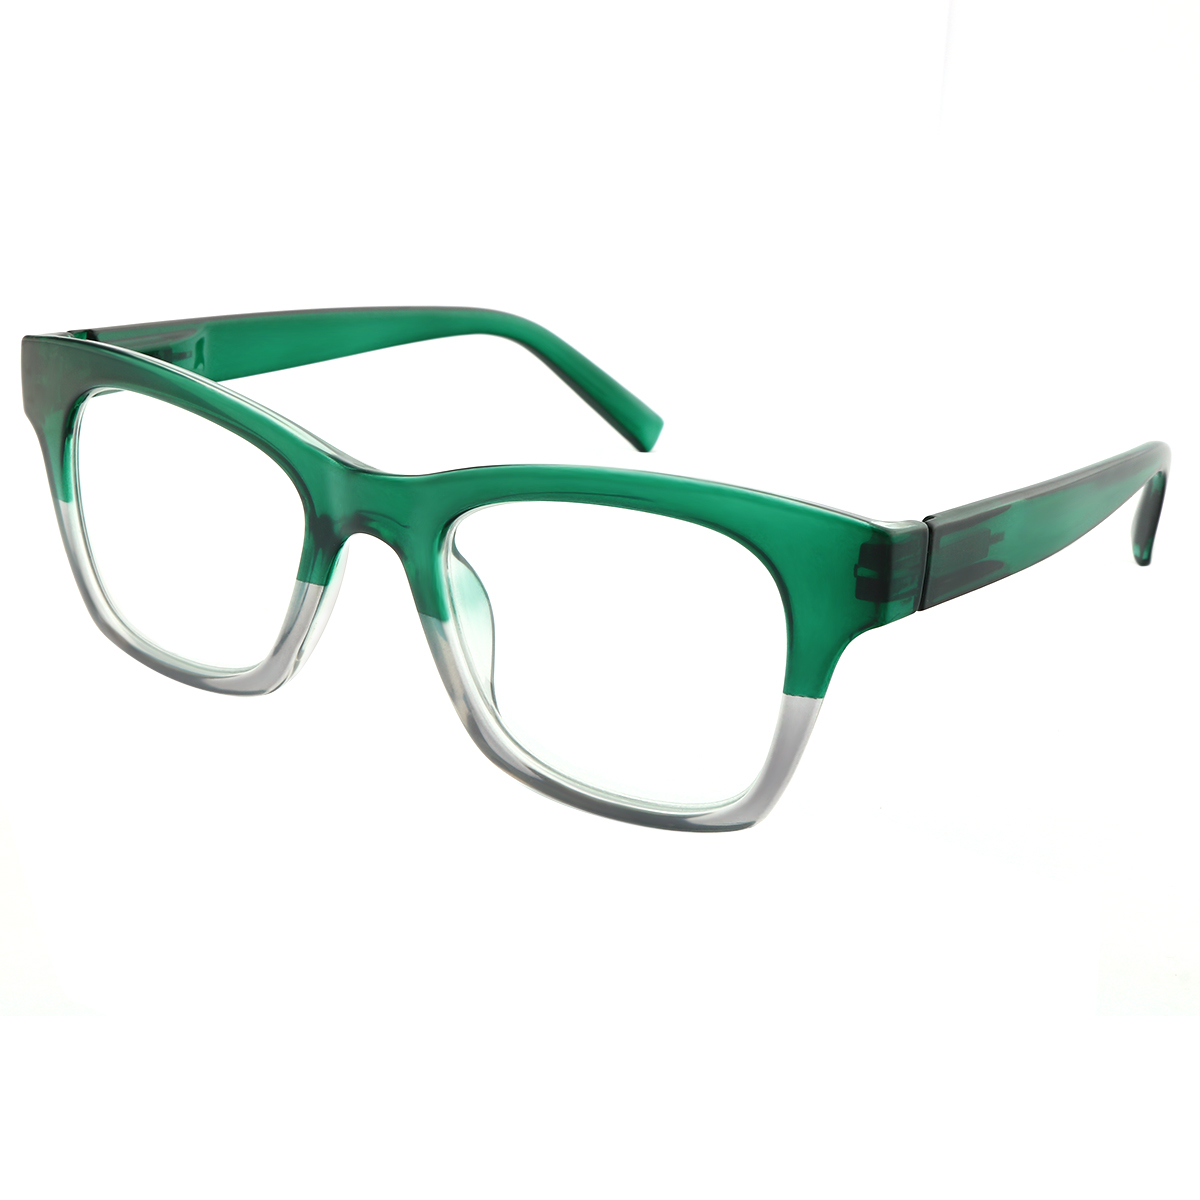 Alesia - Rectangle Green-transparent Reading Glasses for Men & Women